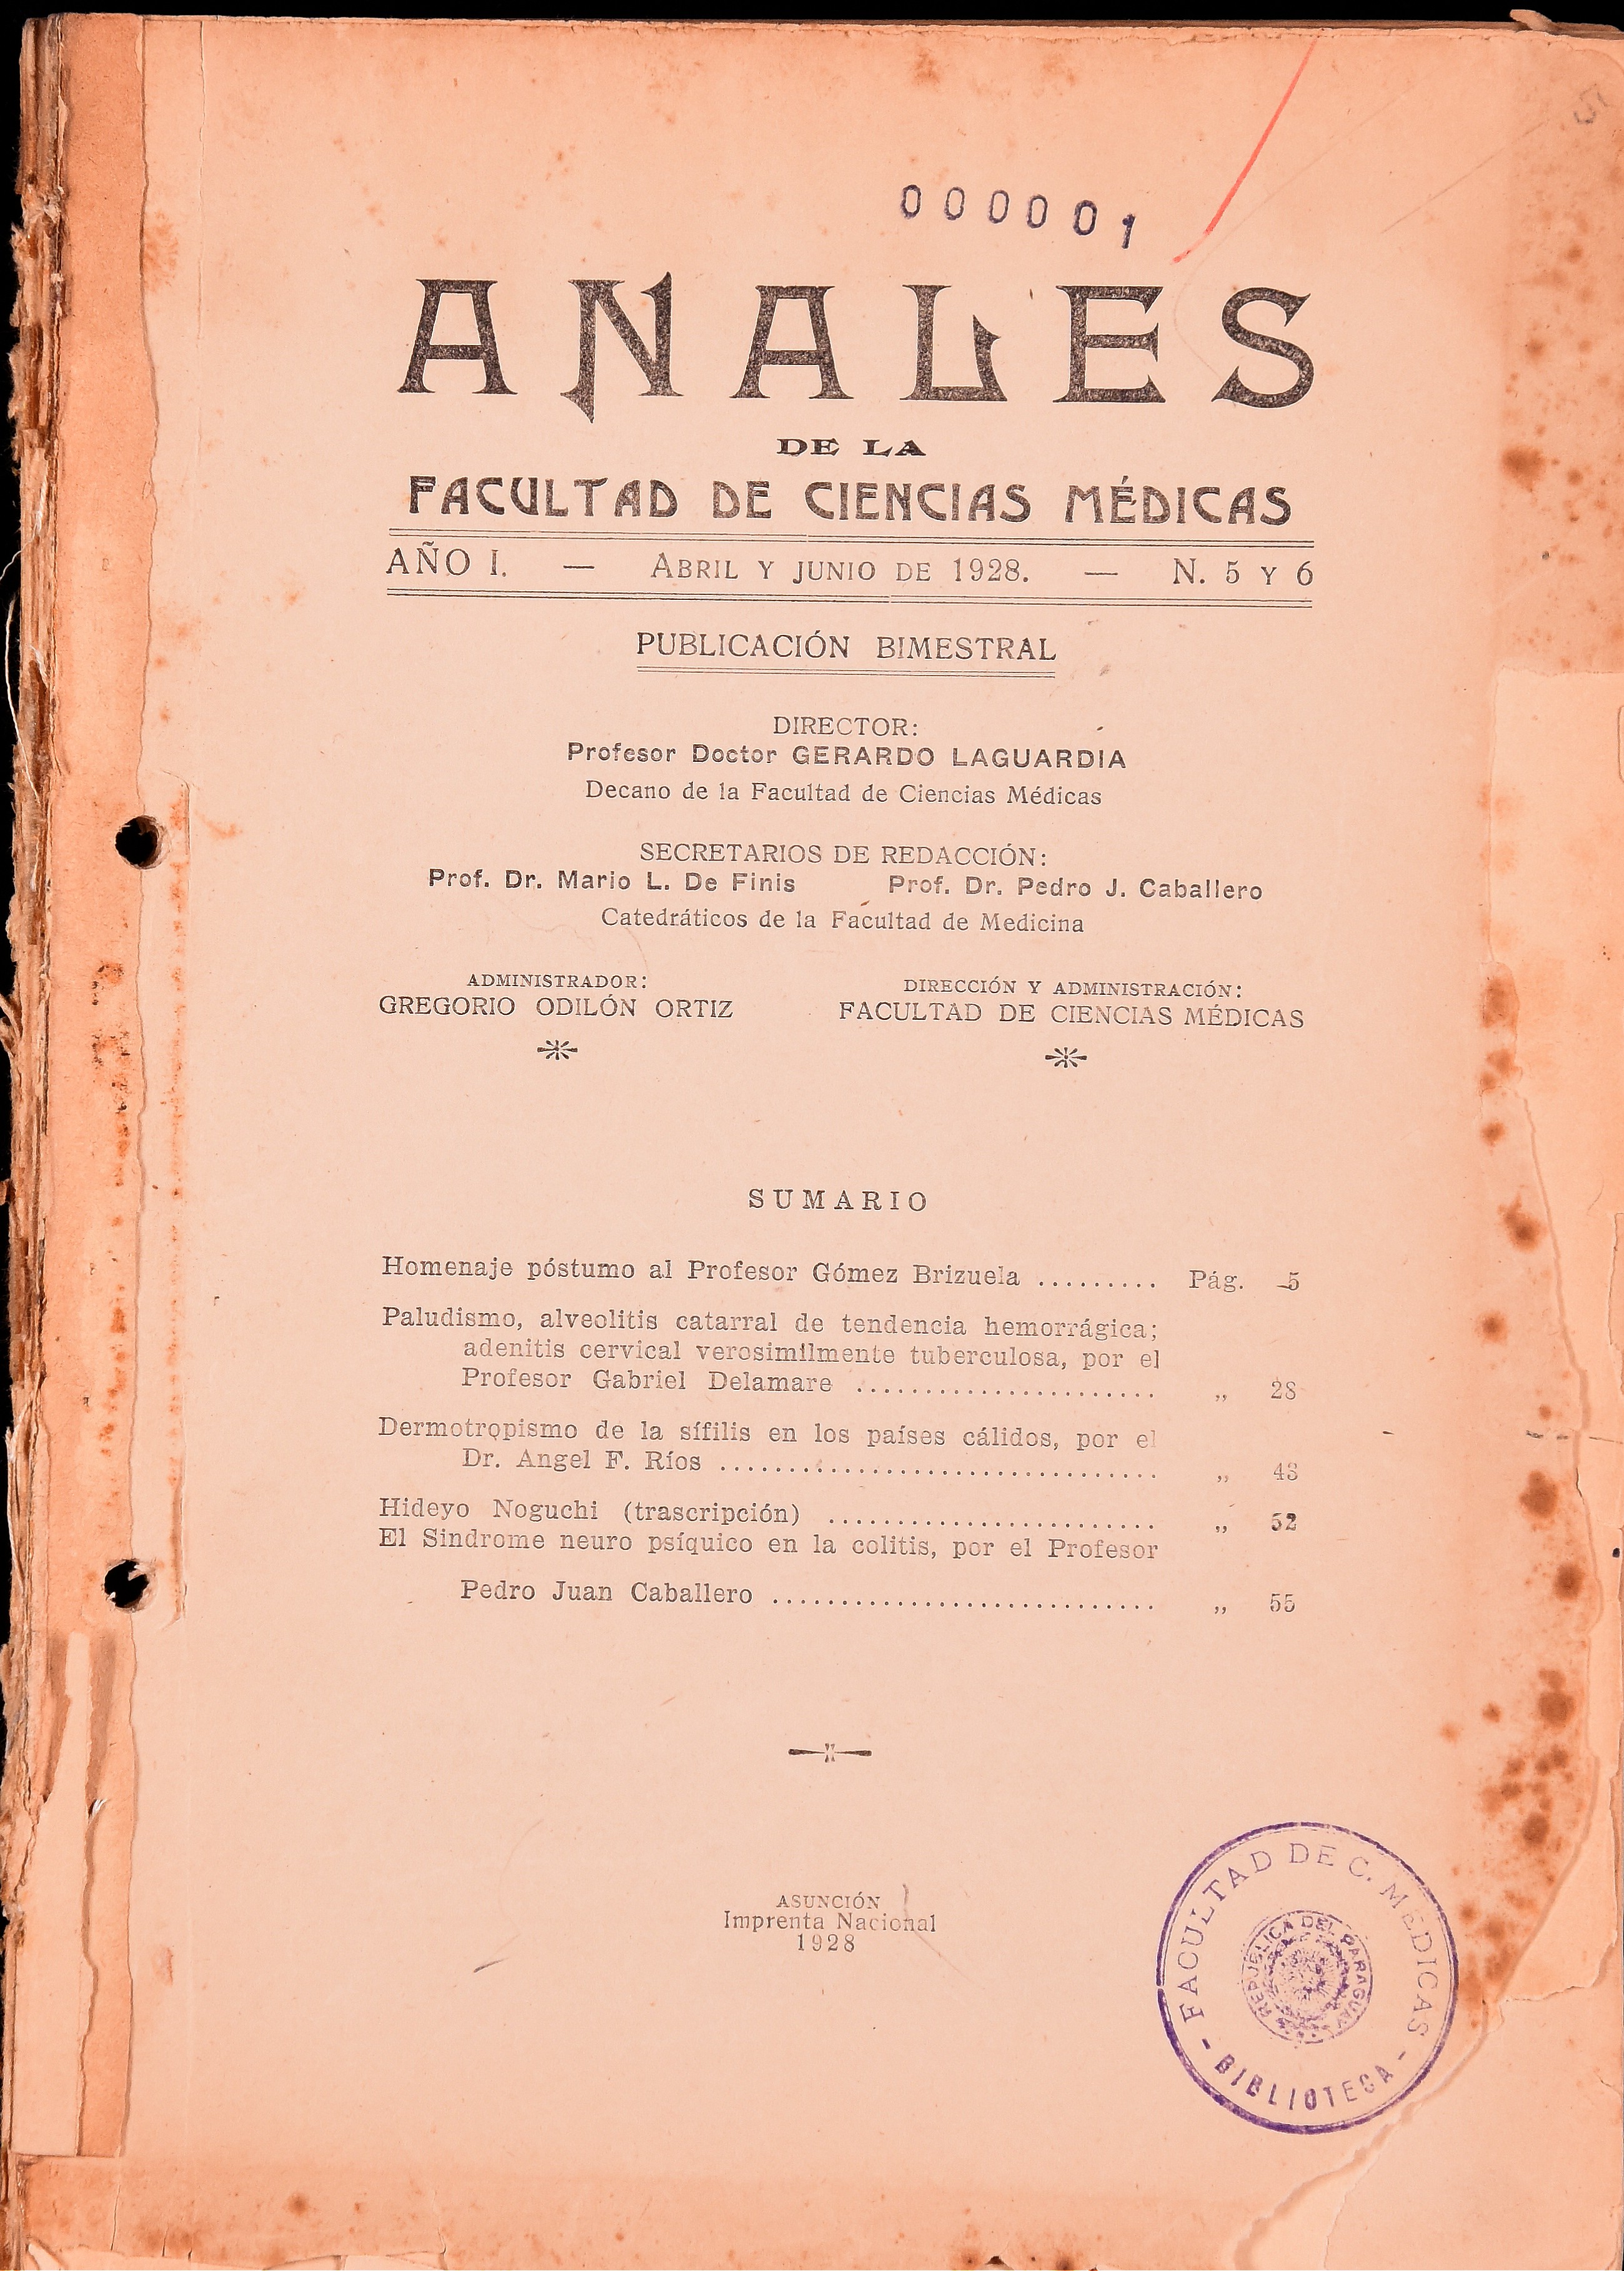 					View Vol. 1 No. 5 y 6 (1928): ANALES of the Faculty of Medical Sciences
				